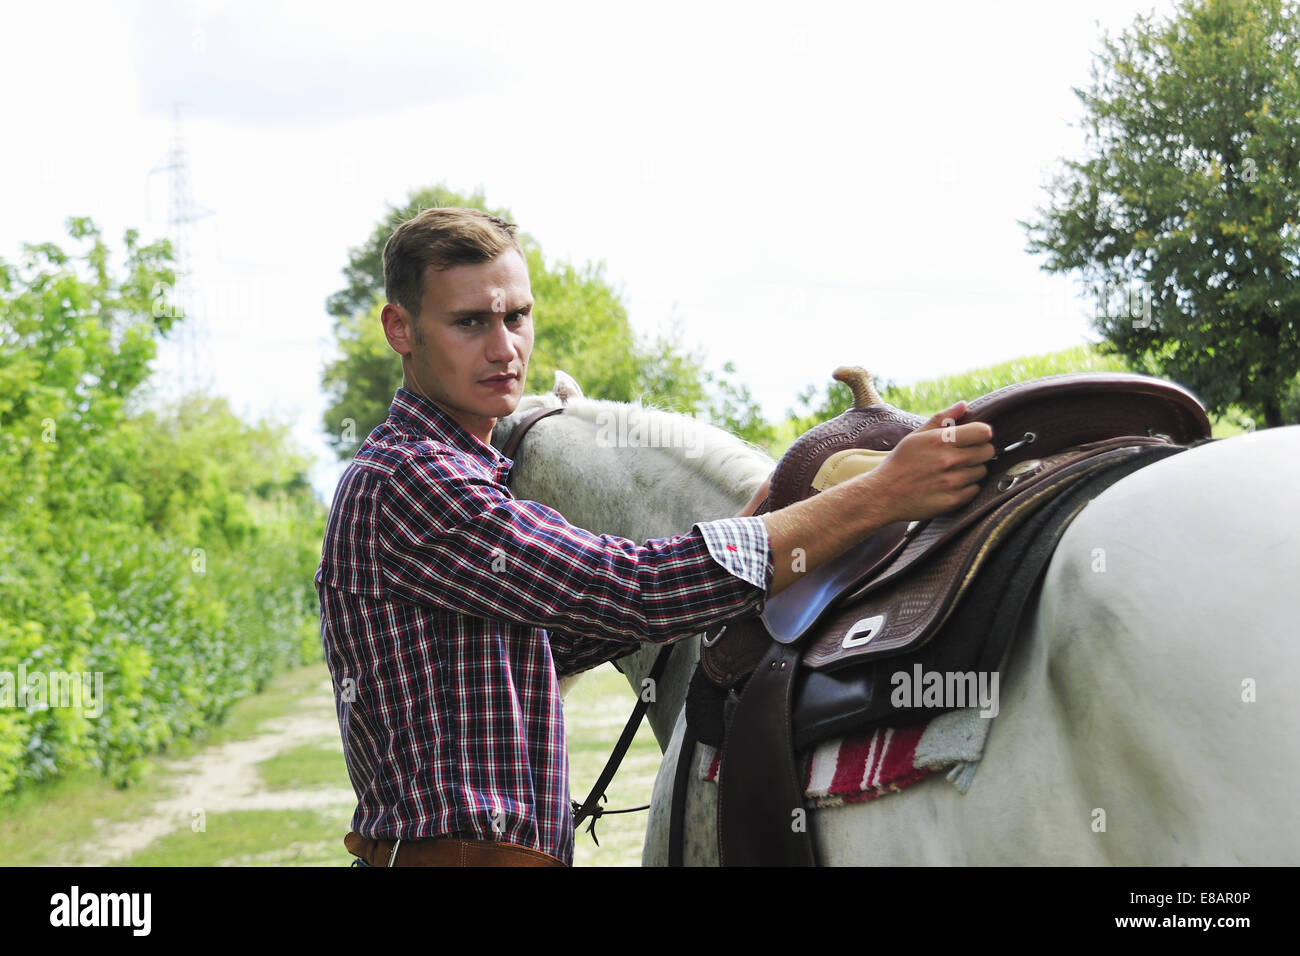 Portrait of young man saddling horse Stock Photo